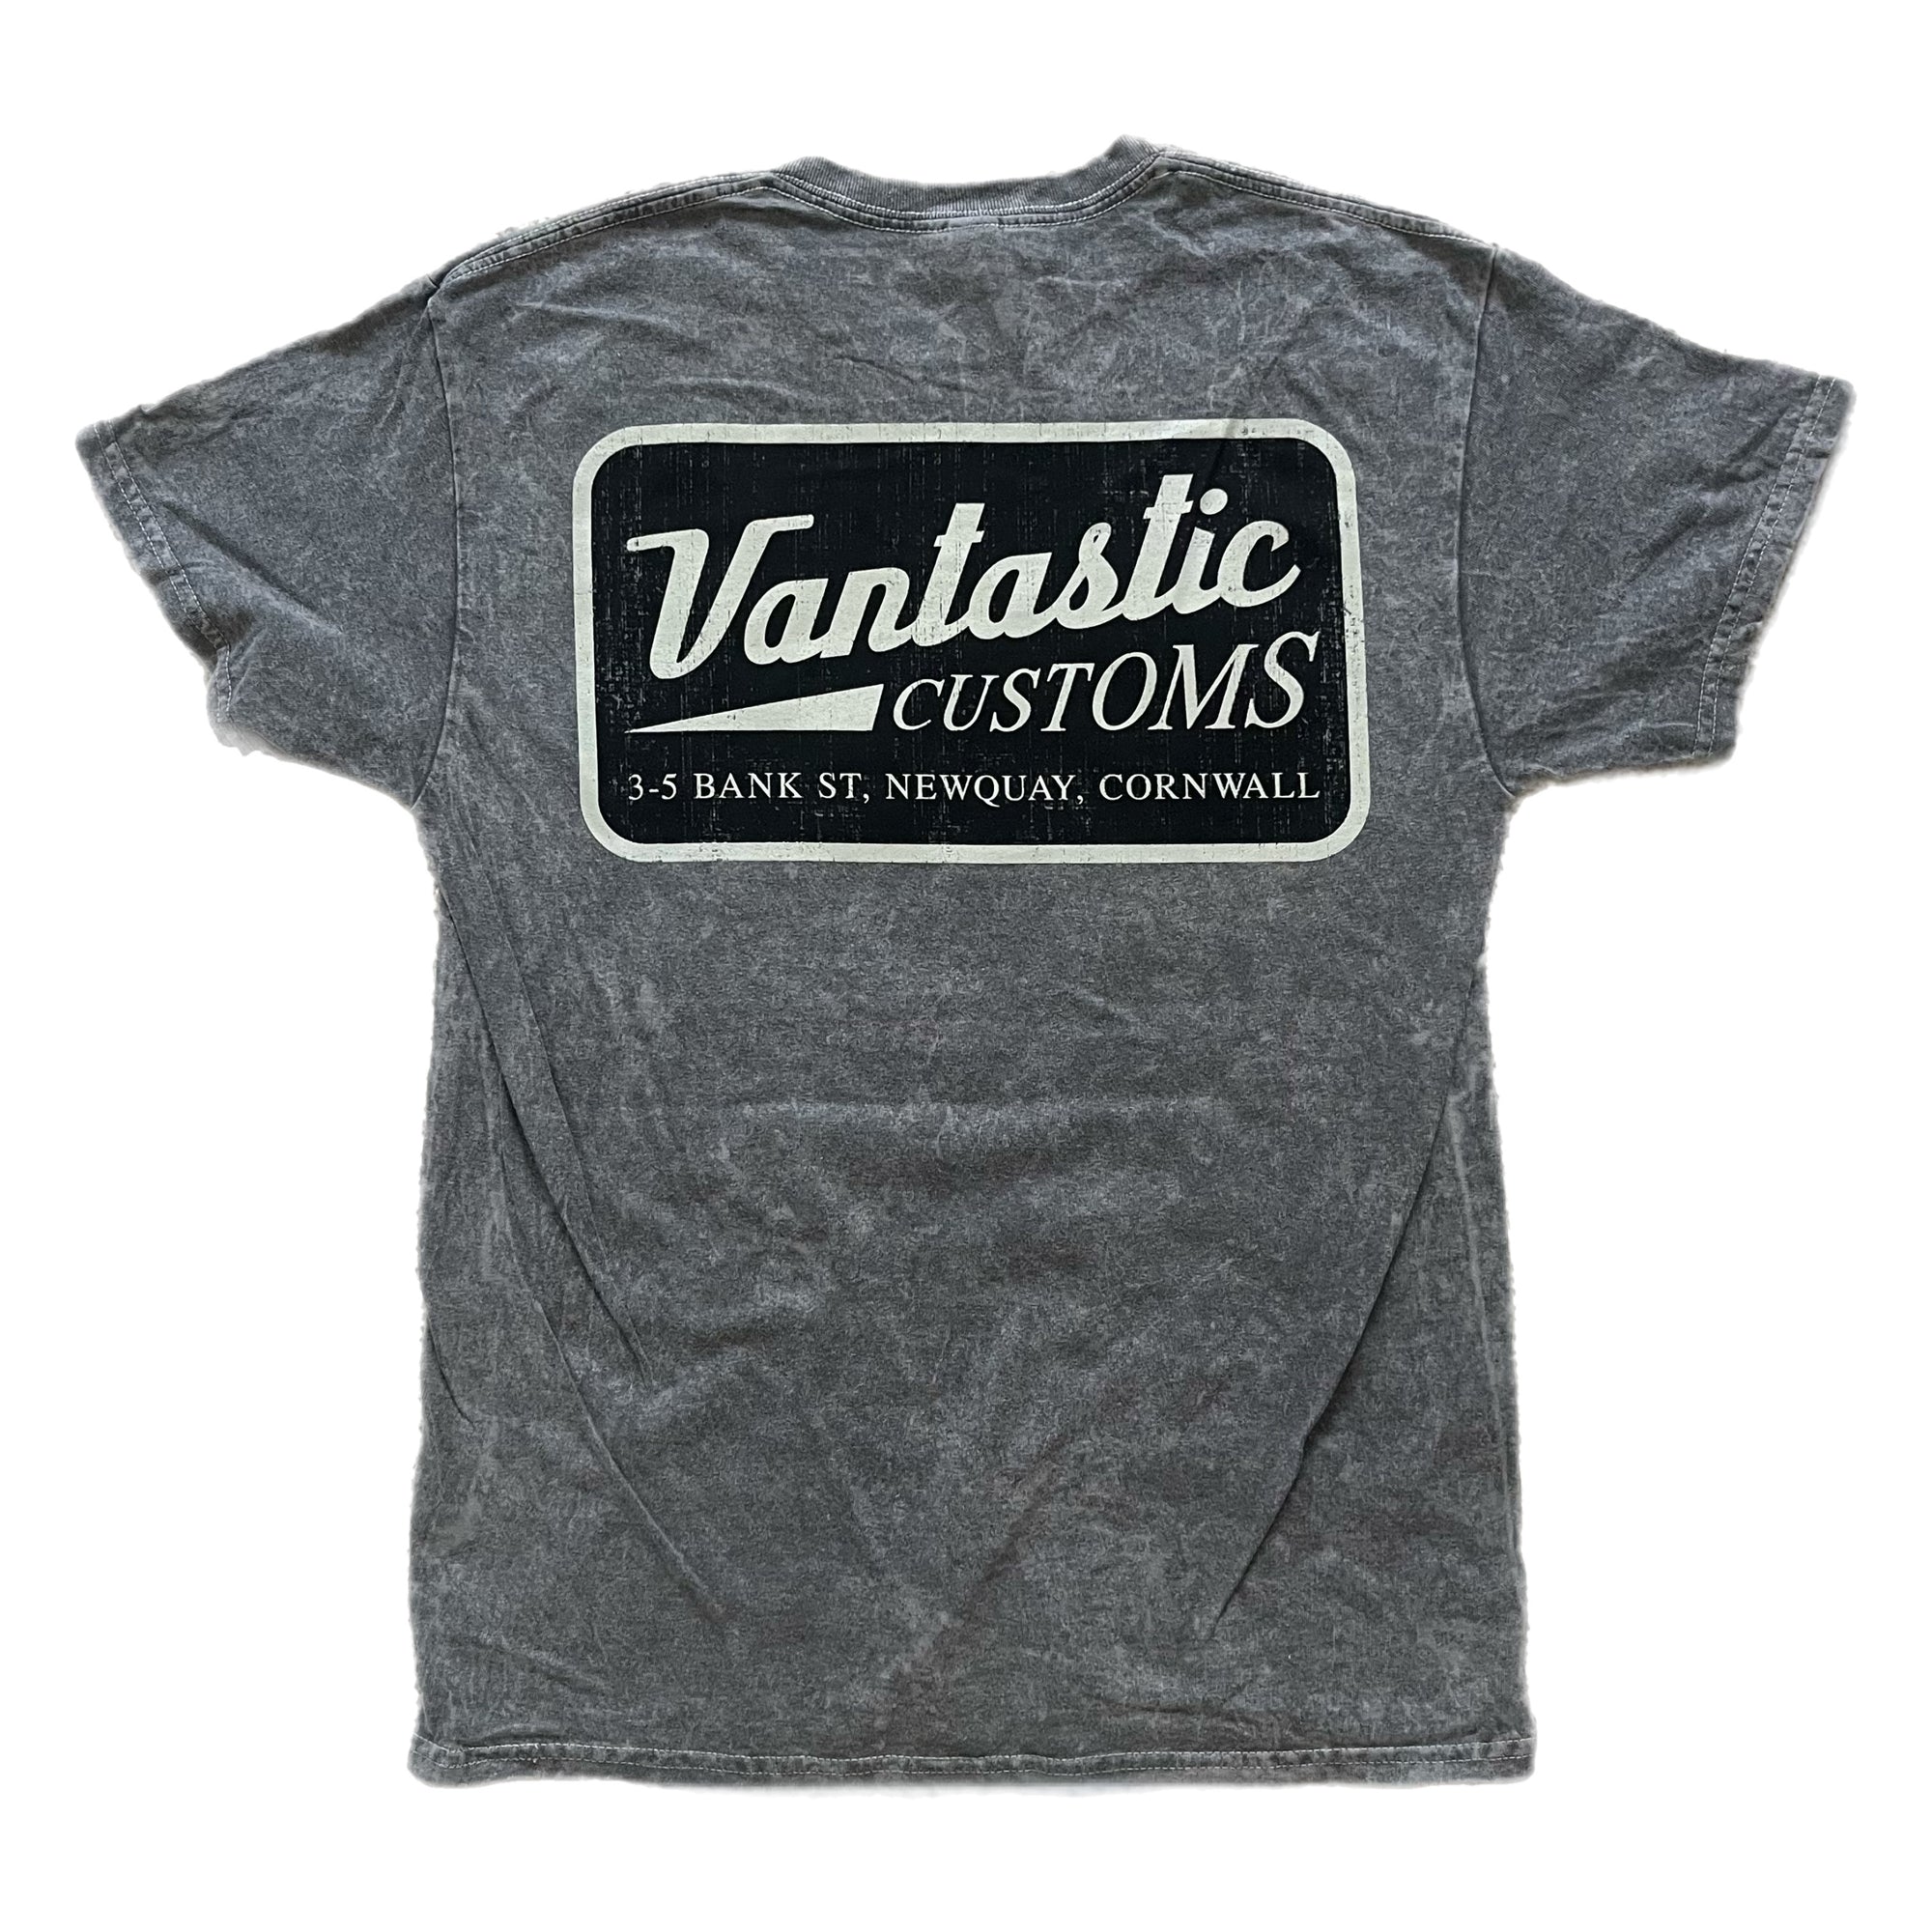 Vintage Obx T-shirt - Washed charcoal